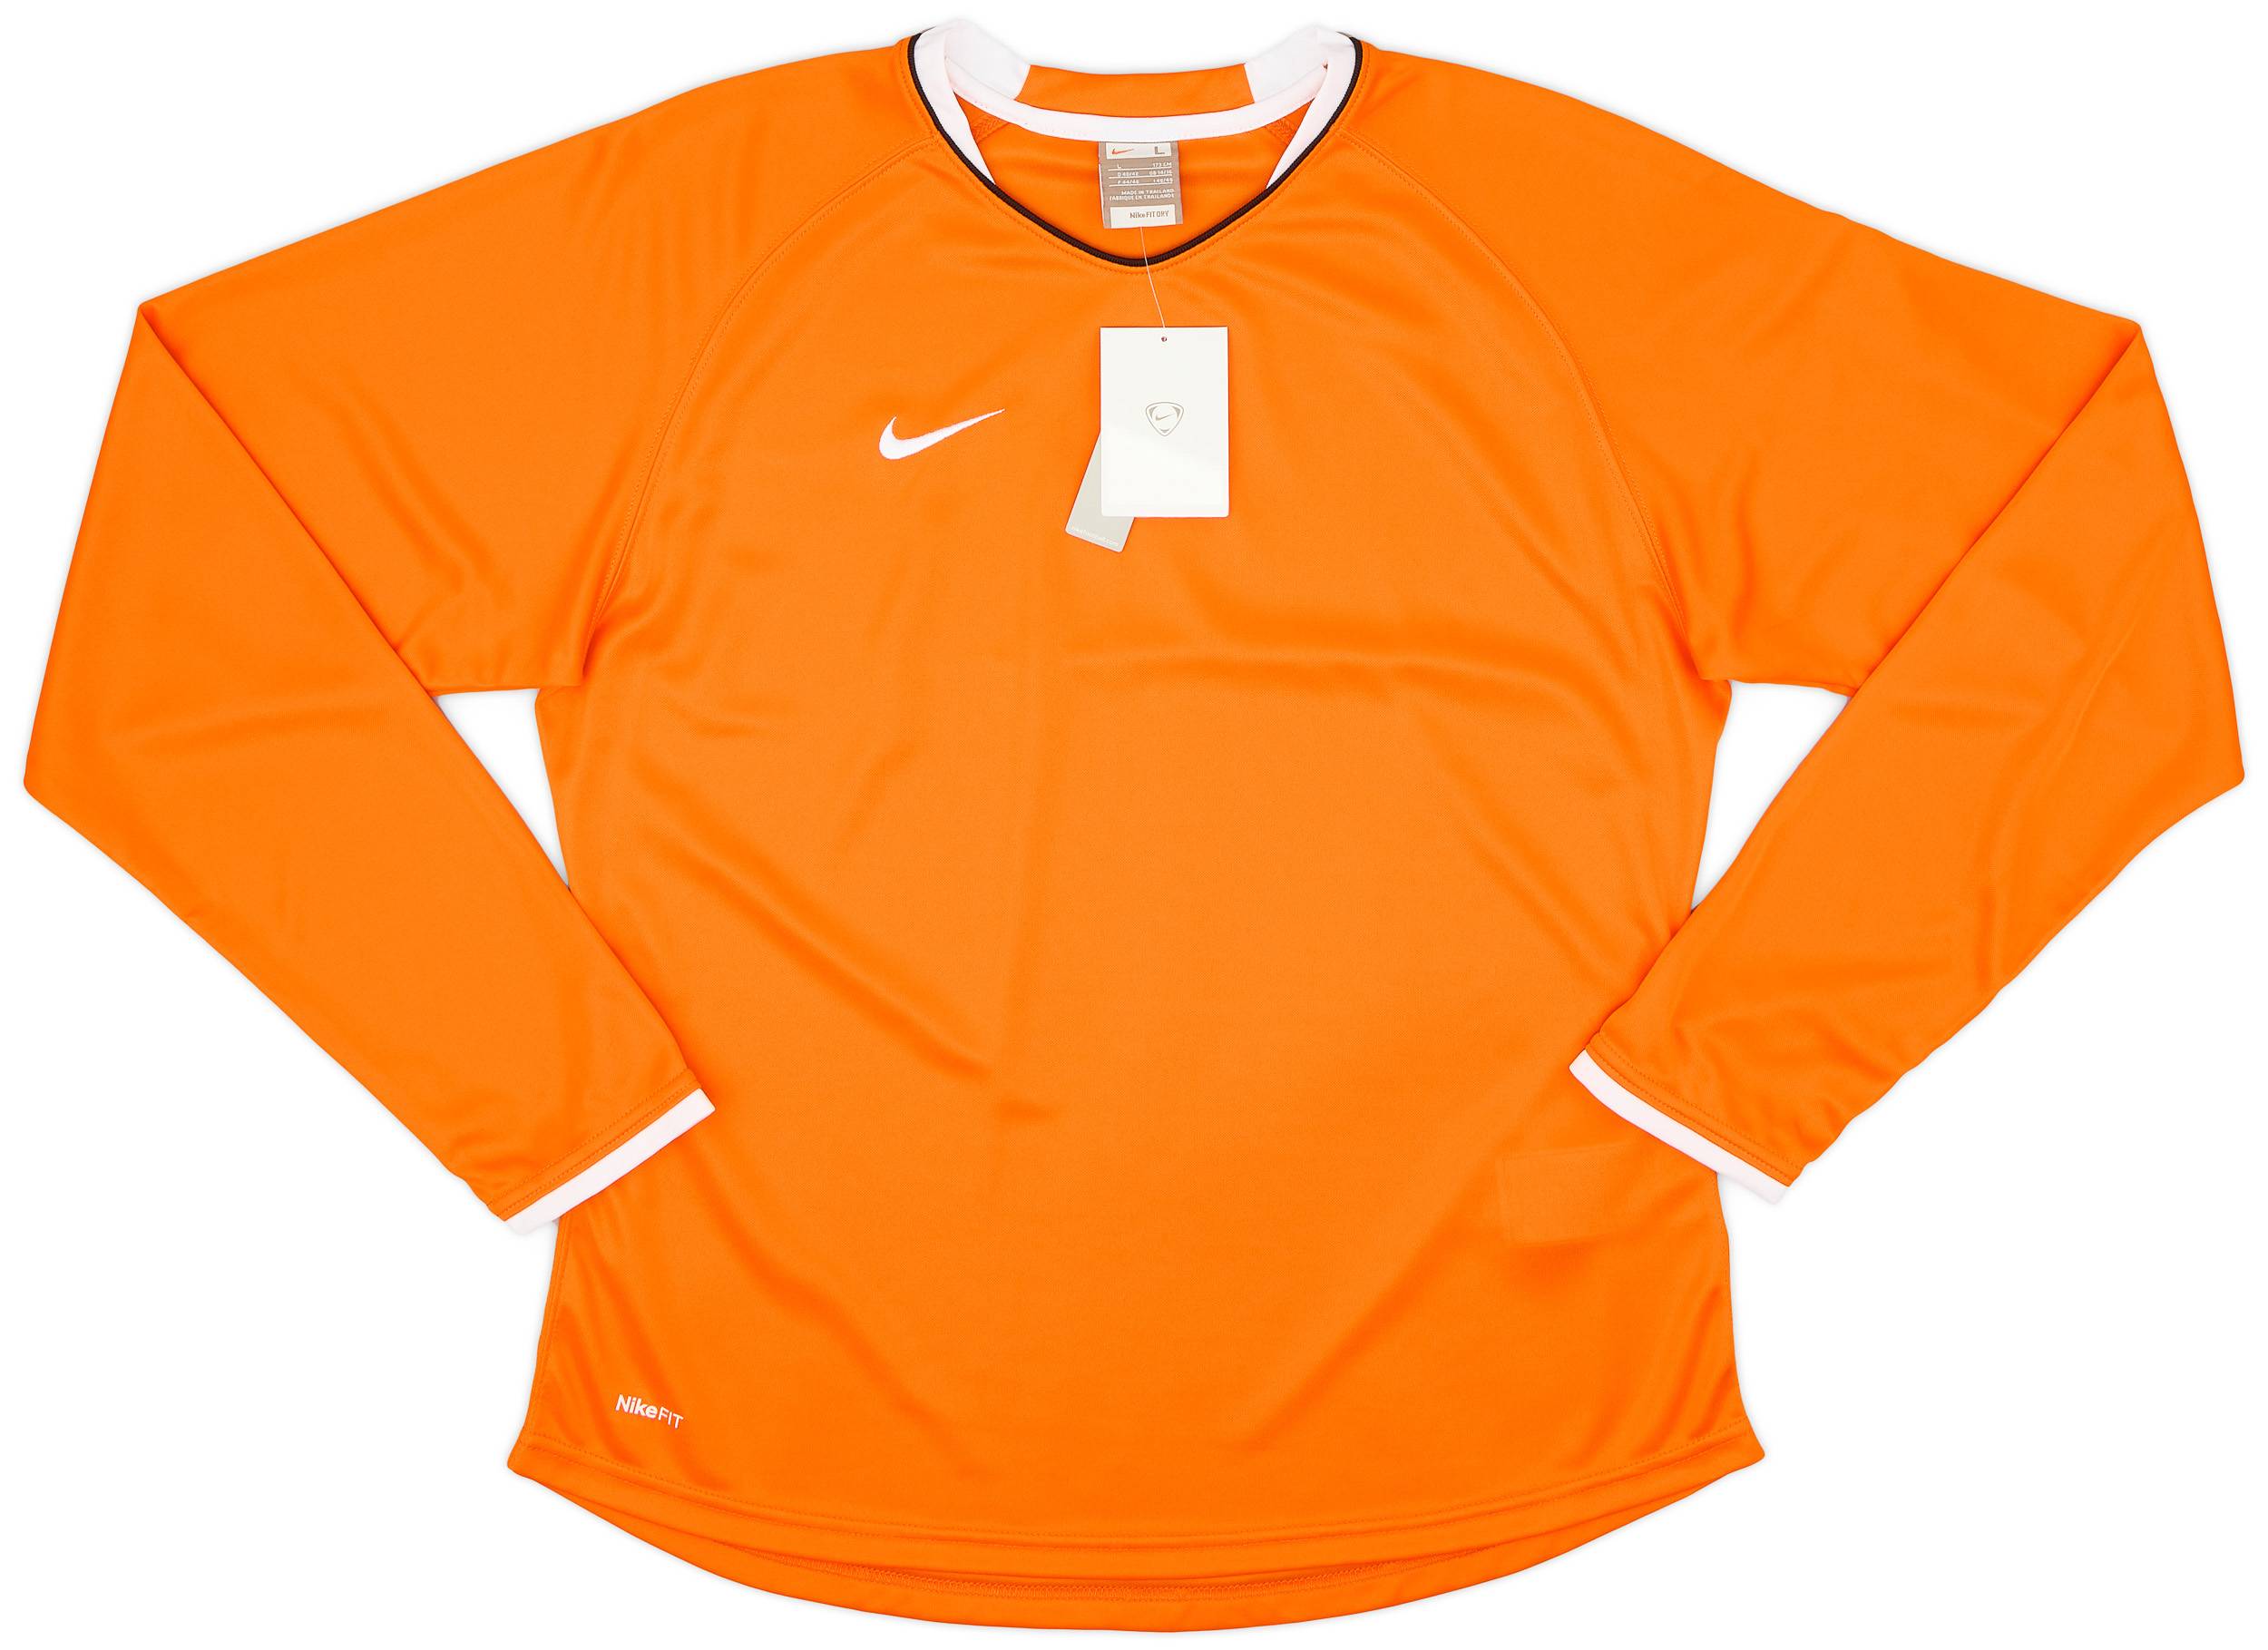 2007-08 Nike Template L/S Shirt - 9/10 - (Women's S)